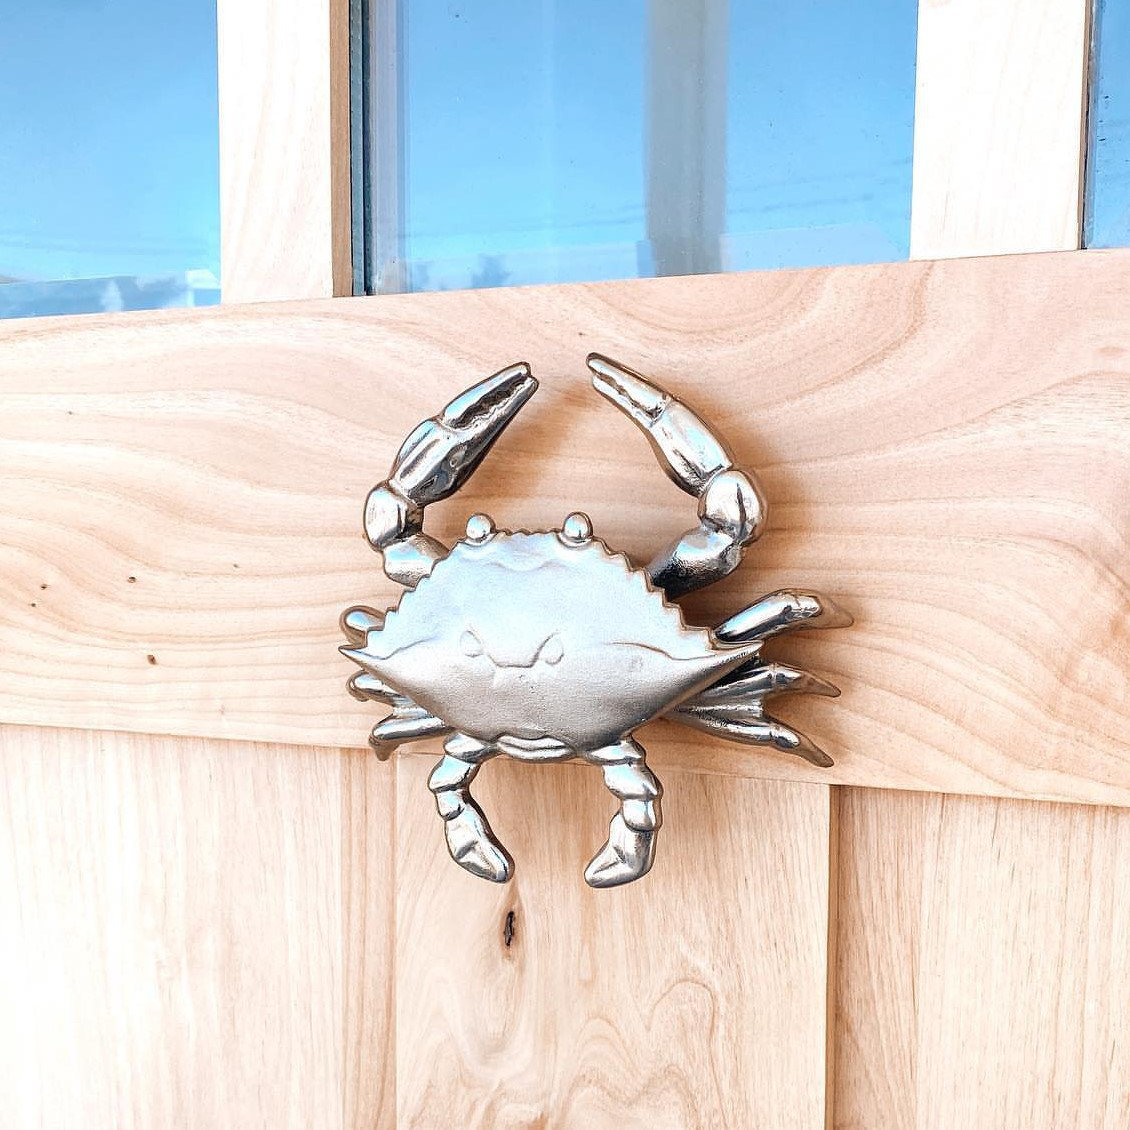 Charming Louisiana Sterling Silver Crab Charm